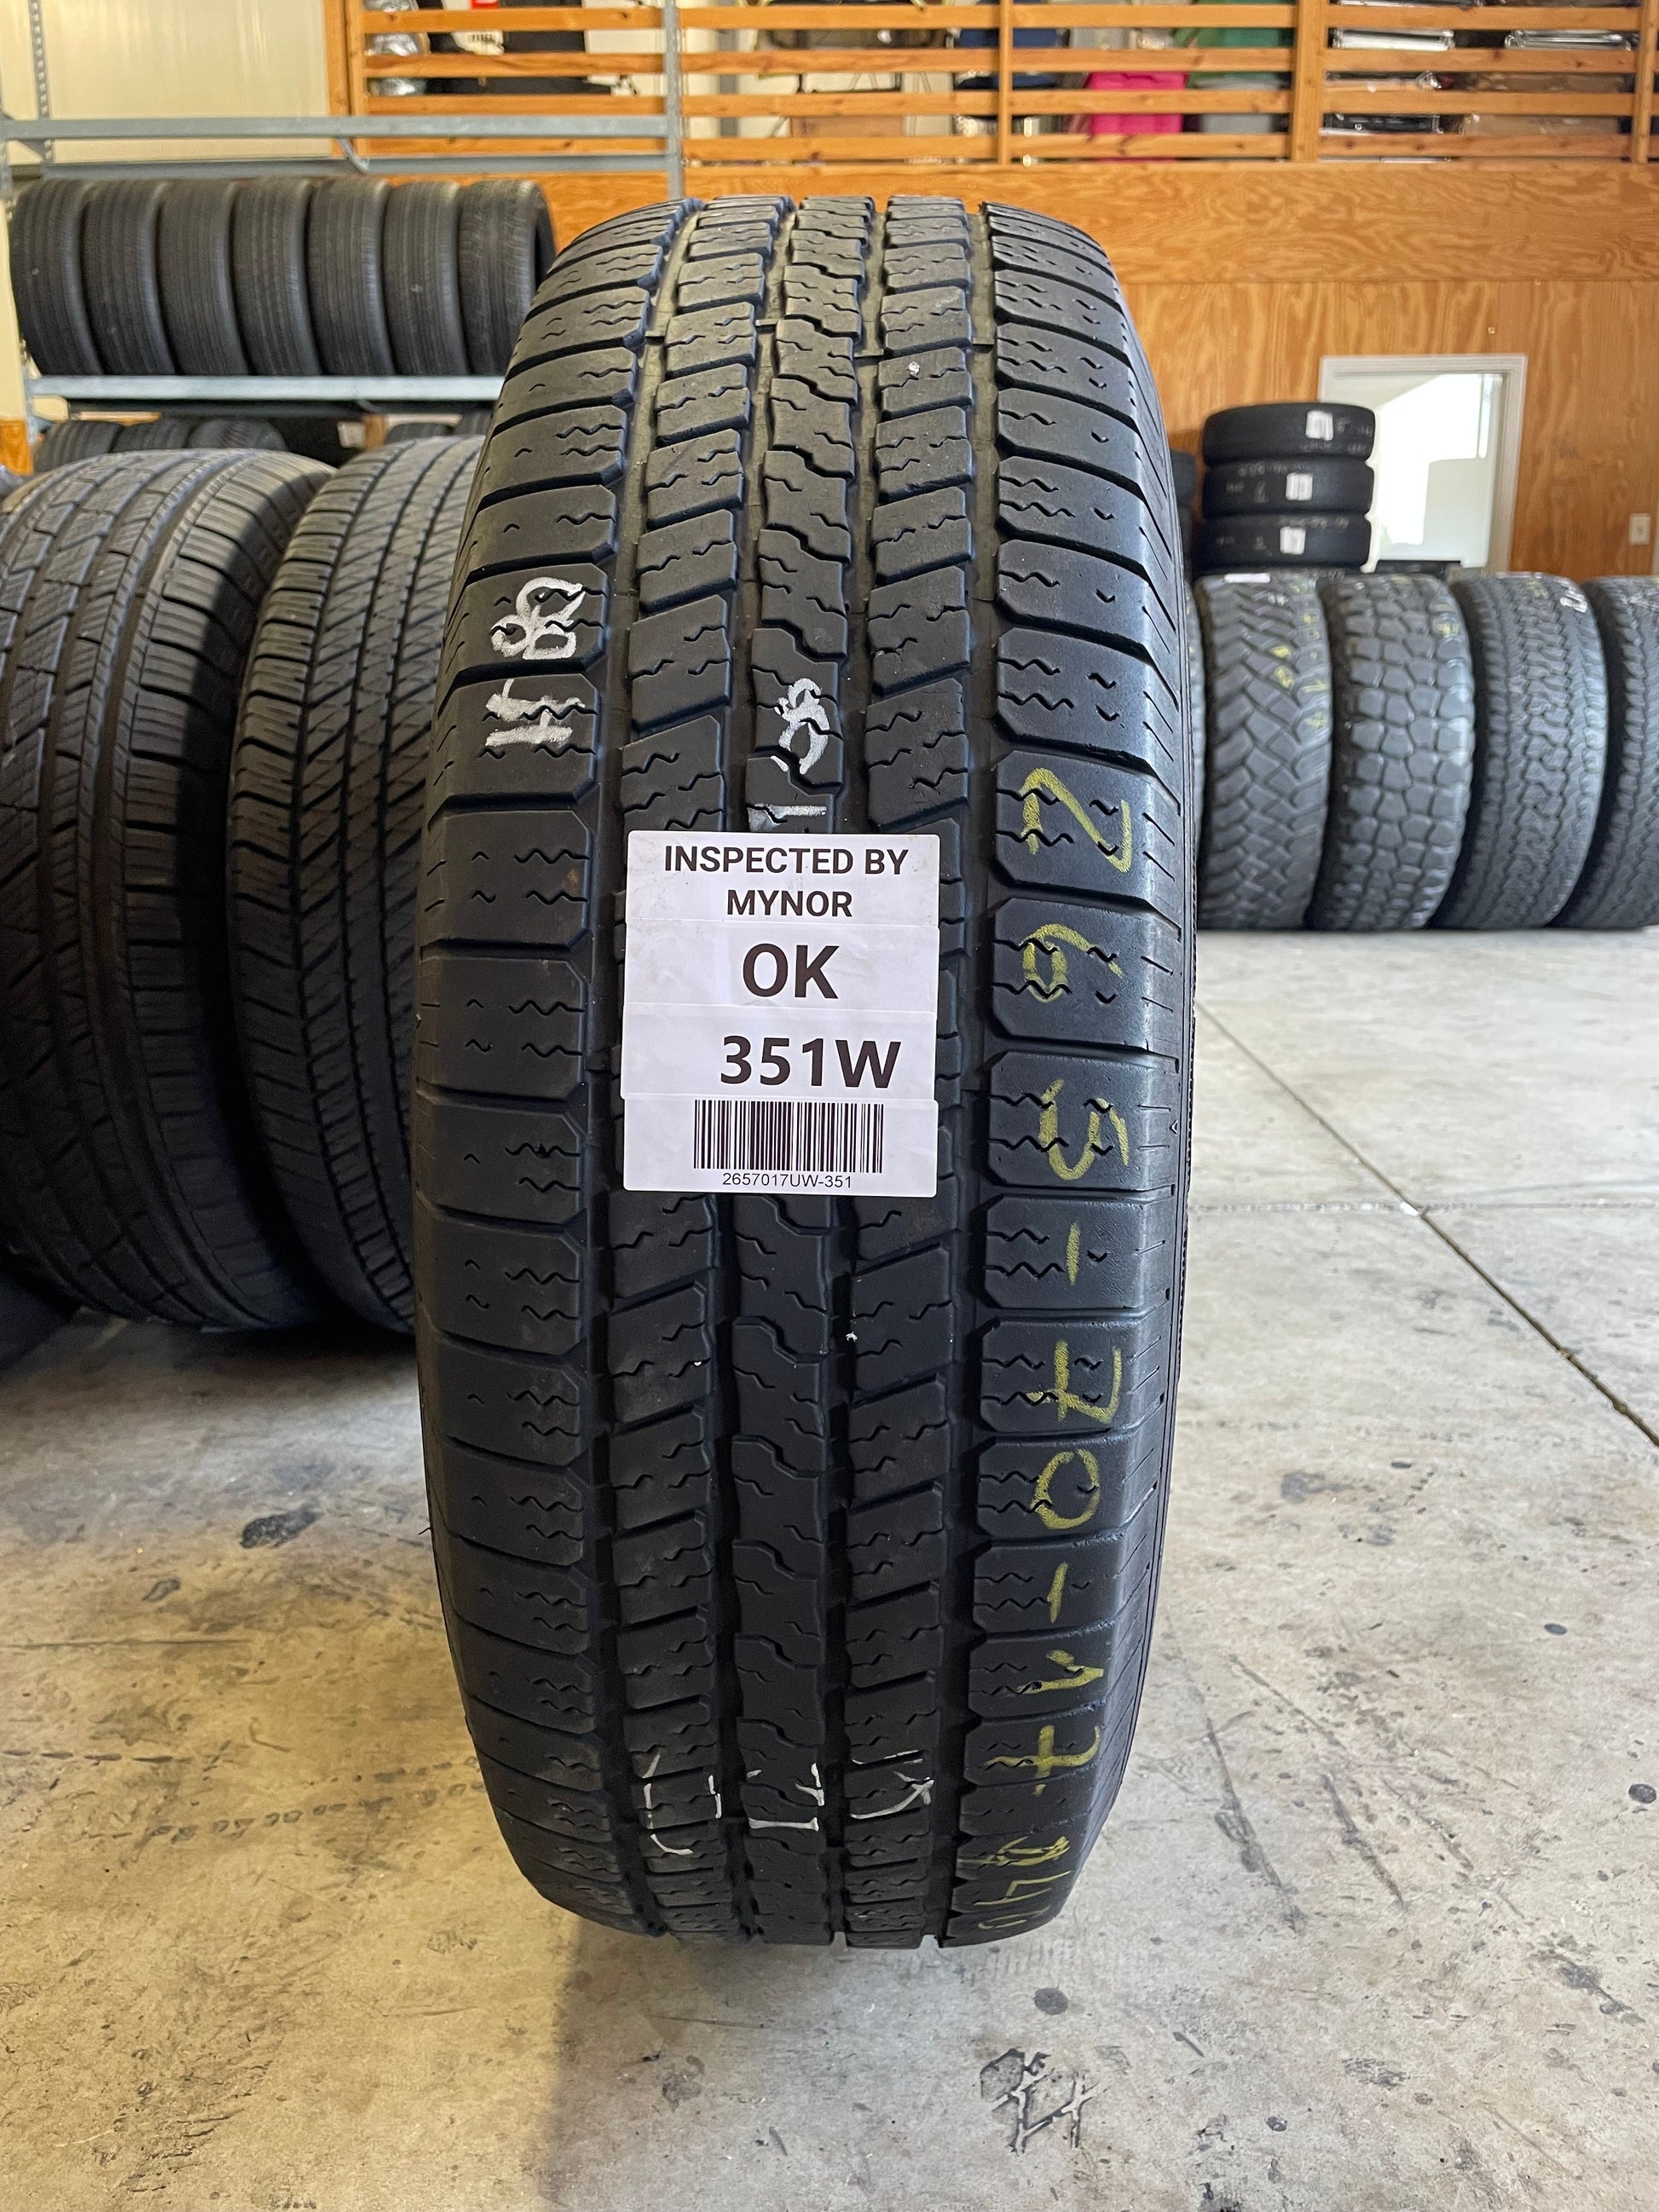 SINGLE 265/70R17 Goodyear Wrangler SR-A 113 R SL - Used Tires – High Tread  Used Tires